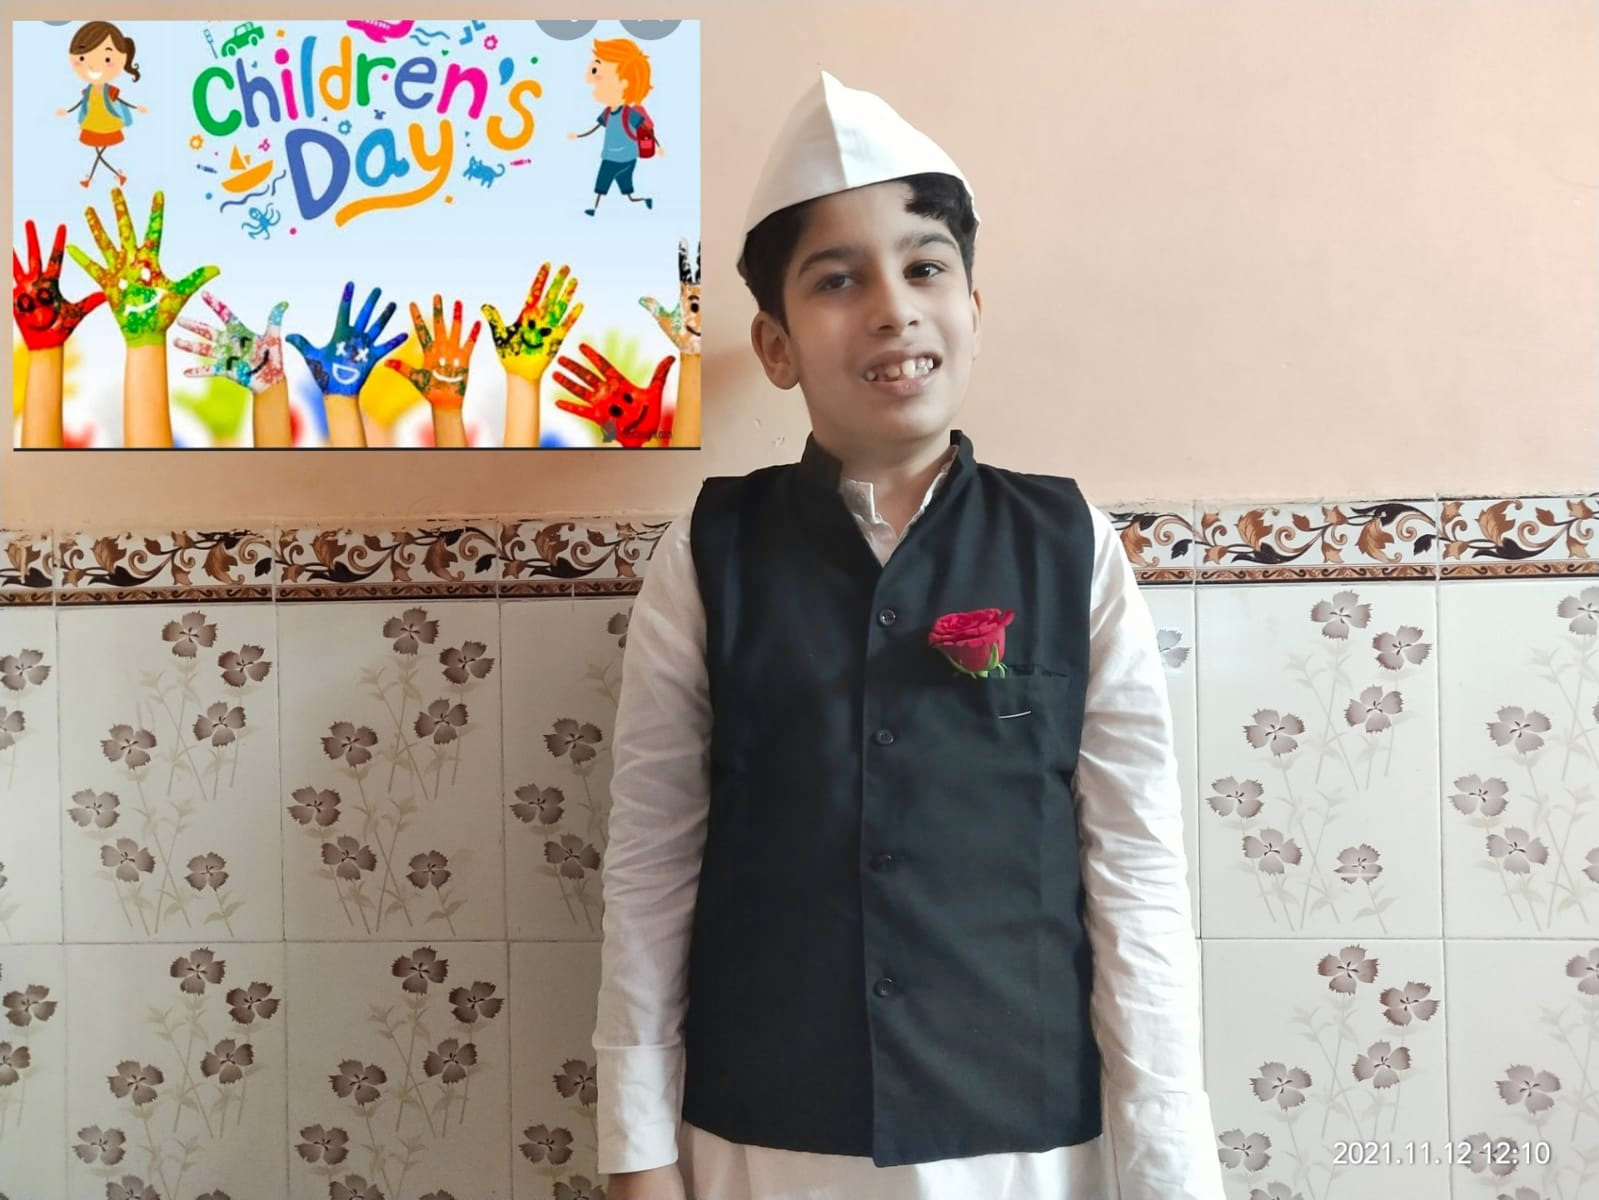 Presidium Dwarka-6, CELEBRATING THE BEST PHASE OF LIFE ON THIS CHILDREN’S DAY